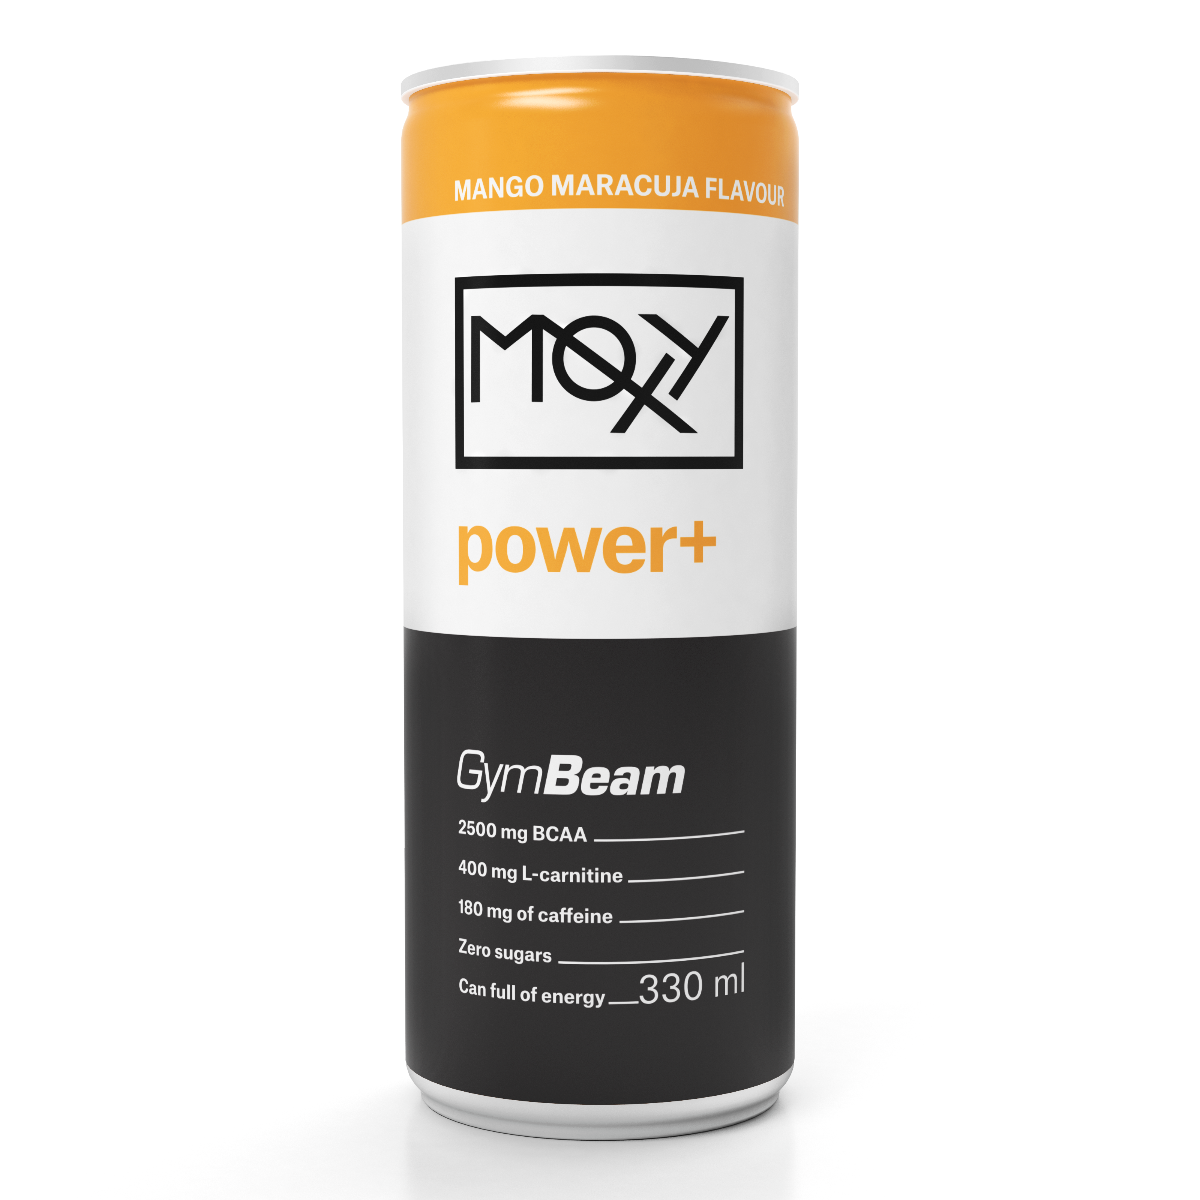 GymBeam Moxy Power+ Energy Drink 330 ml lesné ovocie